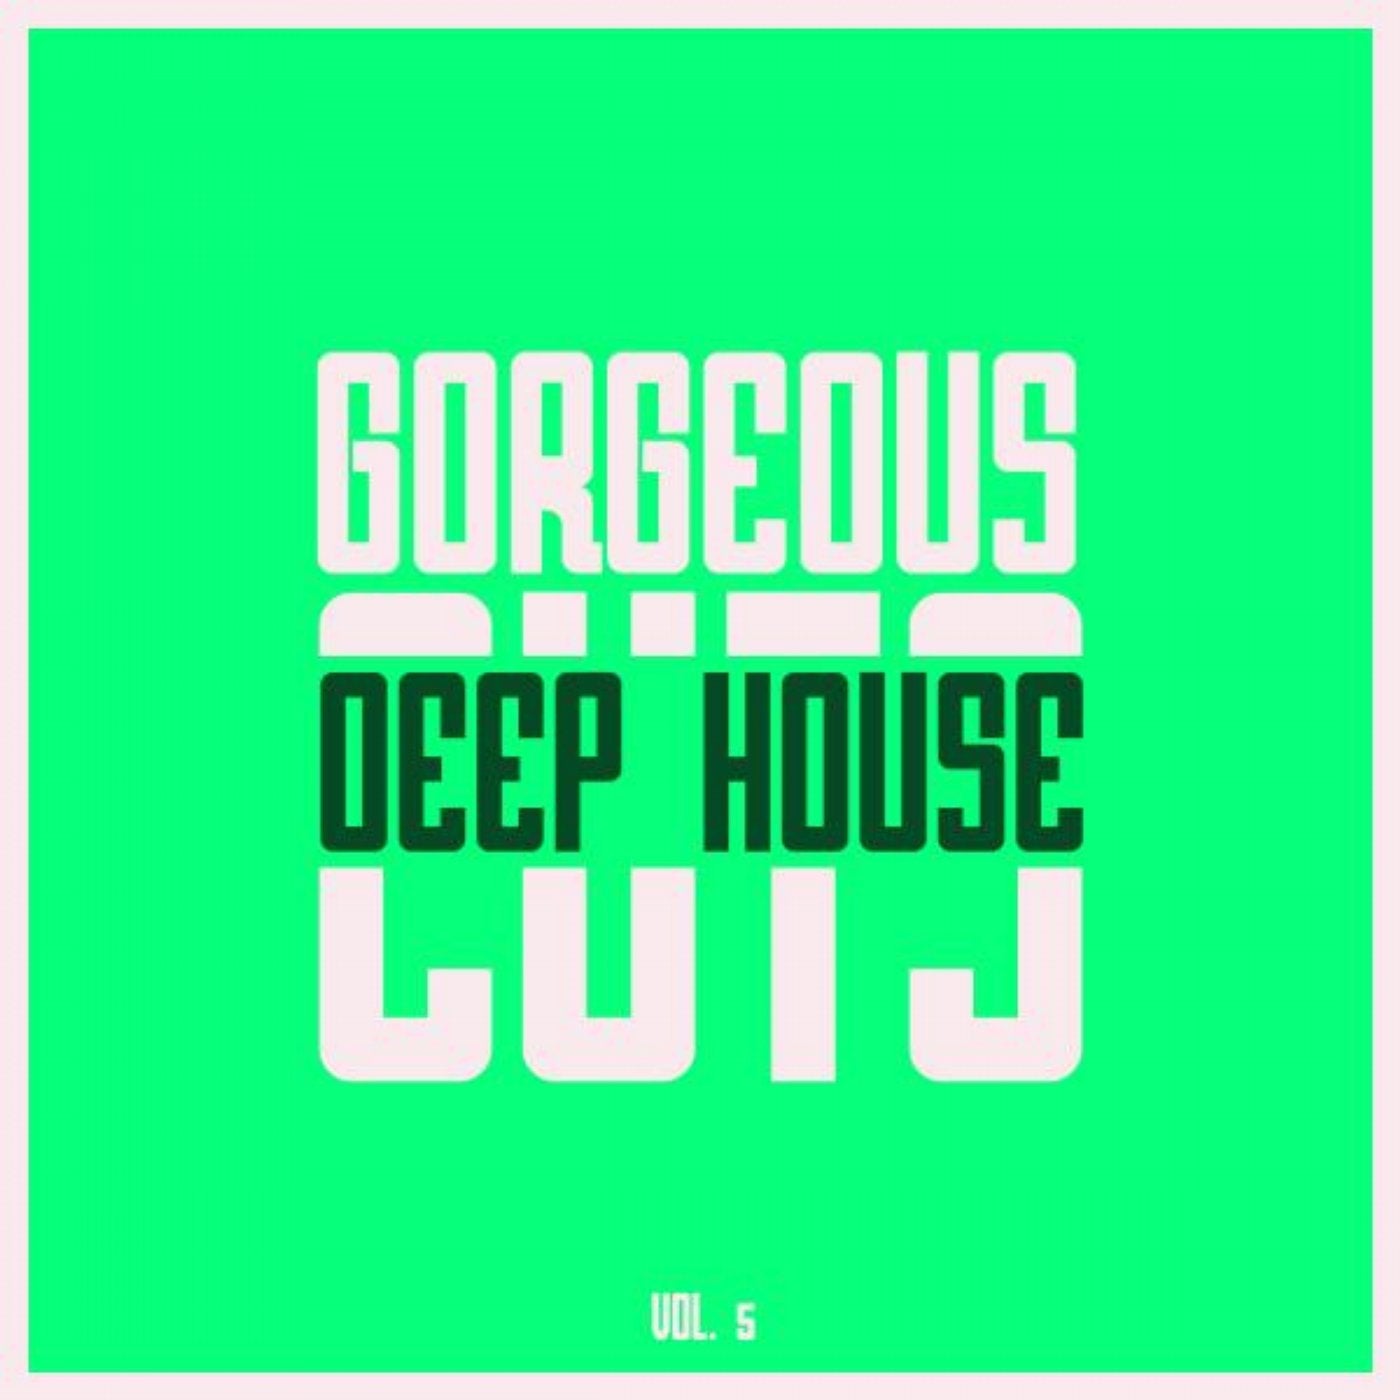 Gorgeous Deep House Cuts, Vol. 5